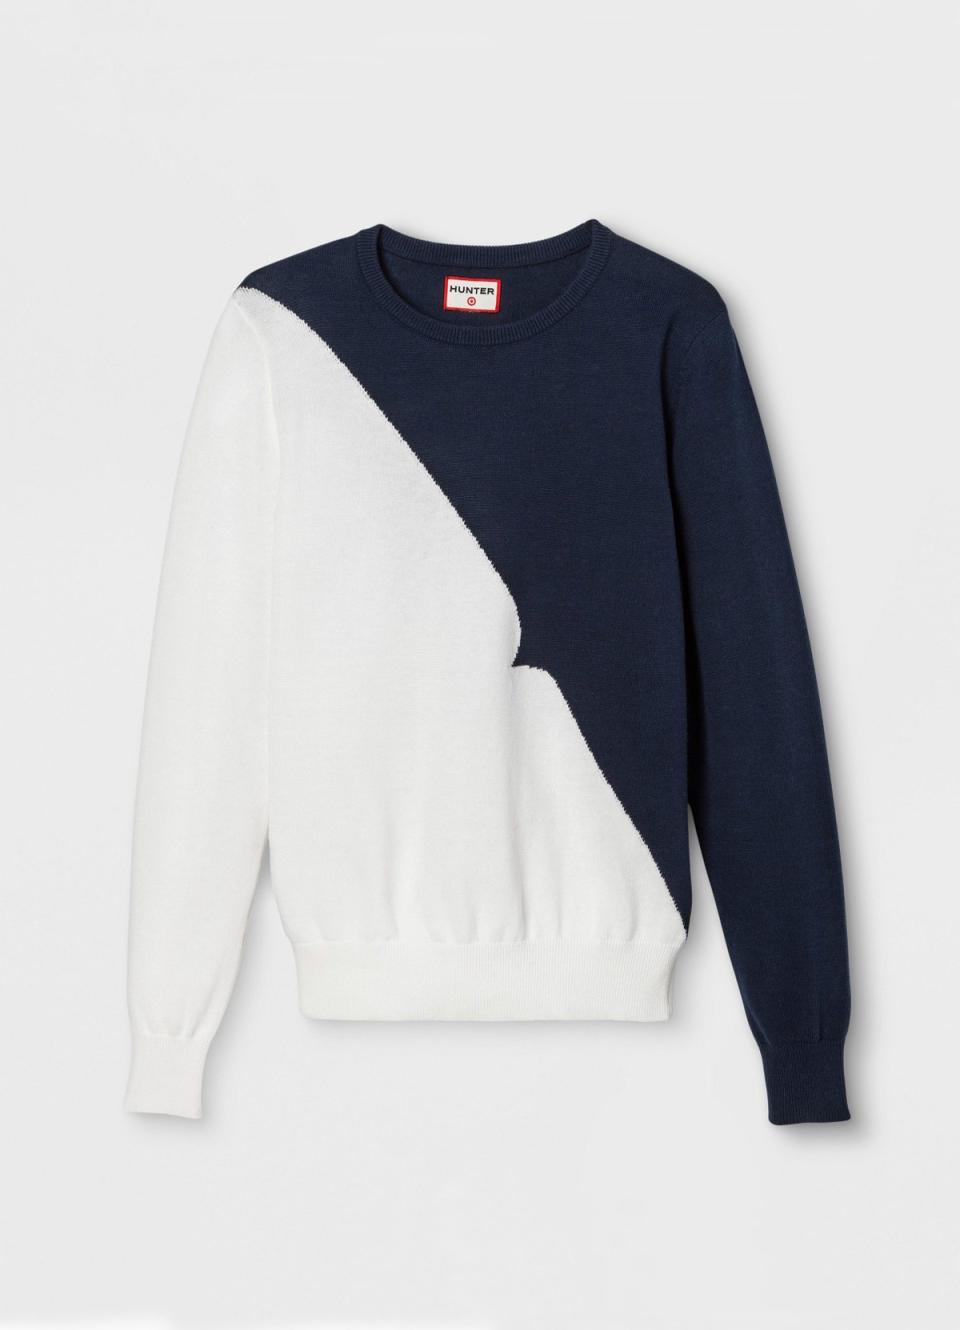 Hunter For Target Women's Colorblock Lightweight Sweater, $26, Target